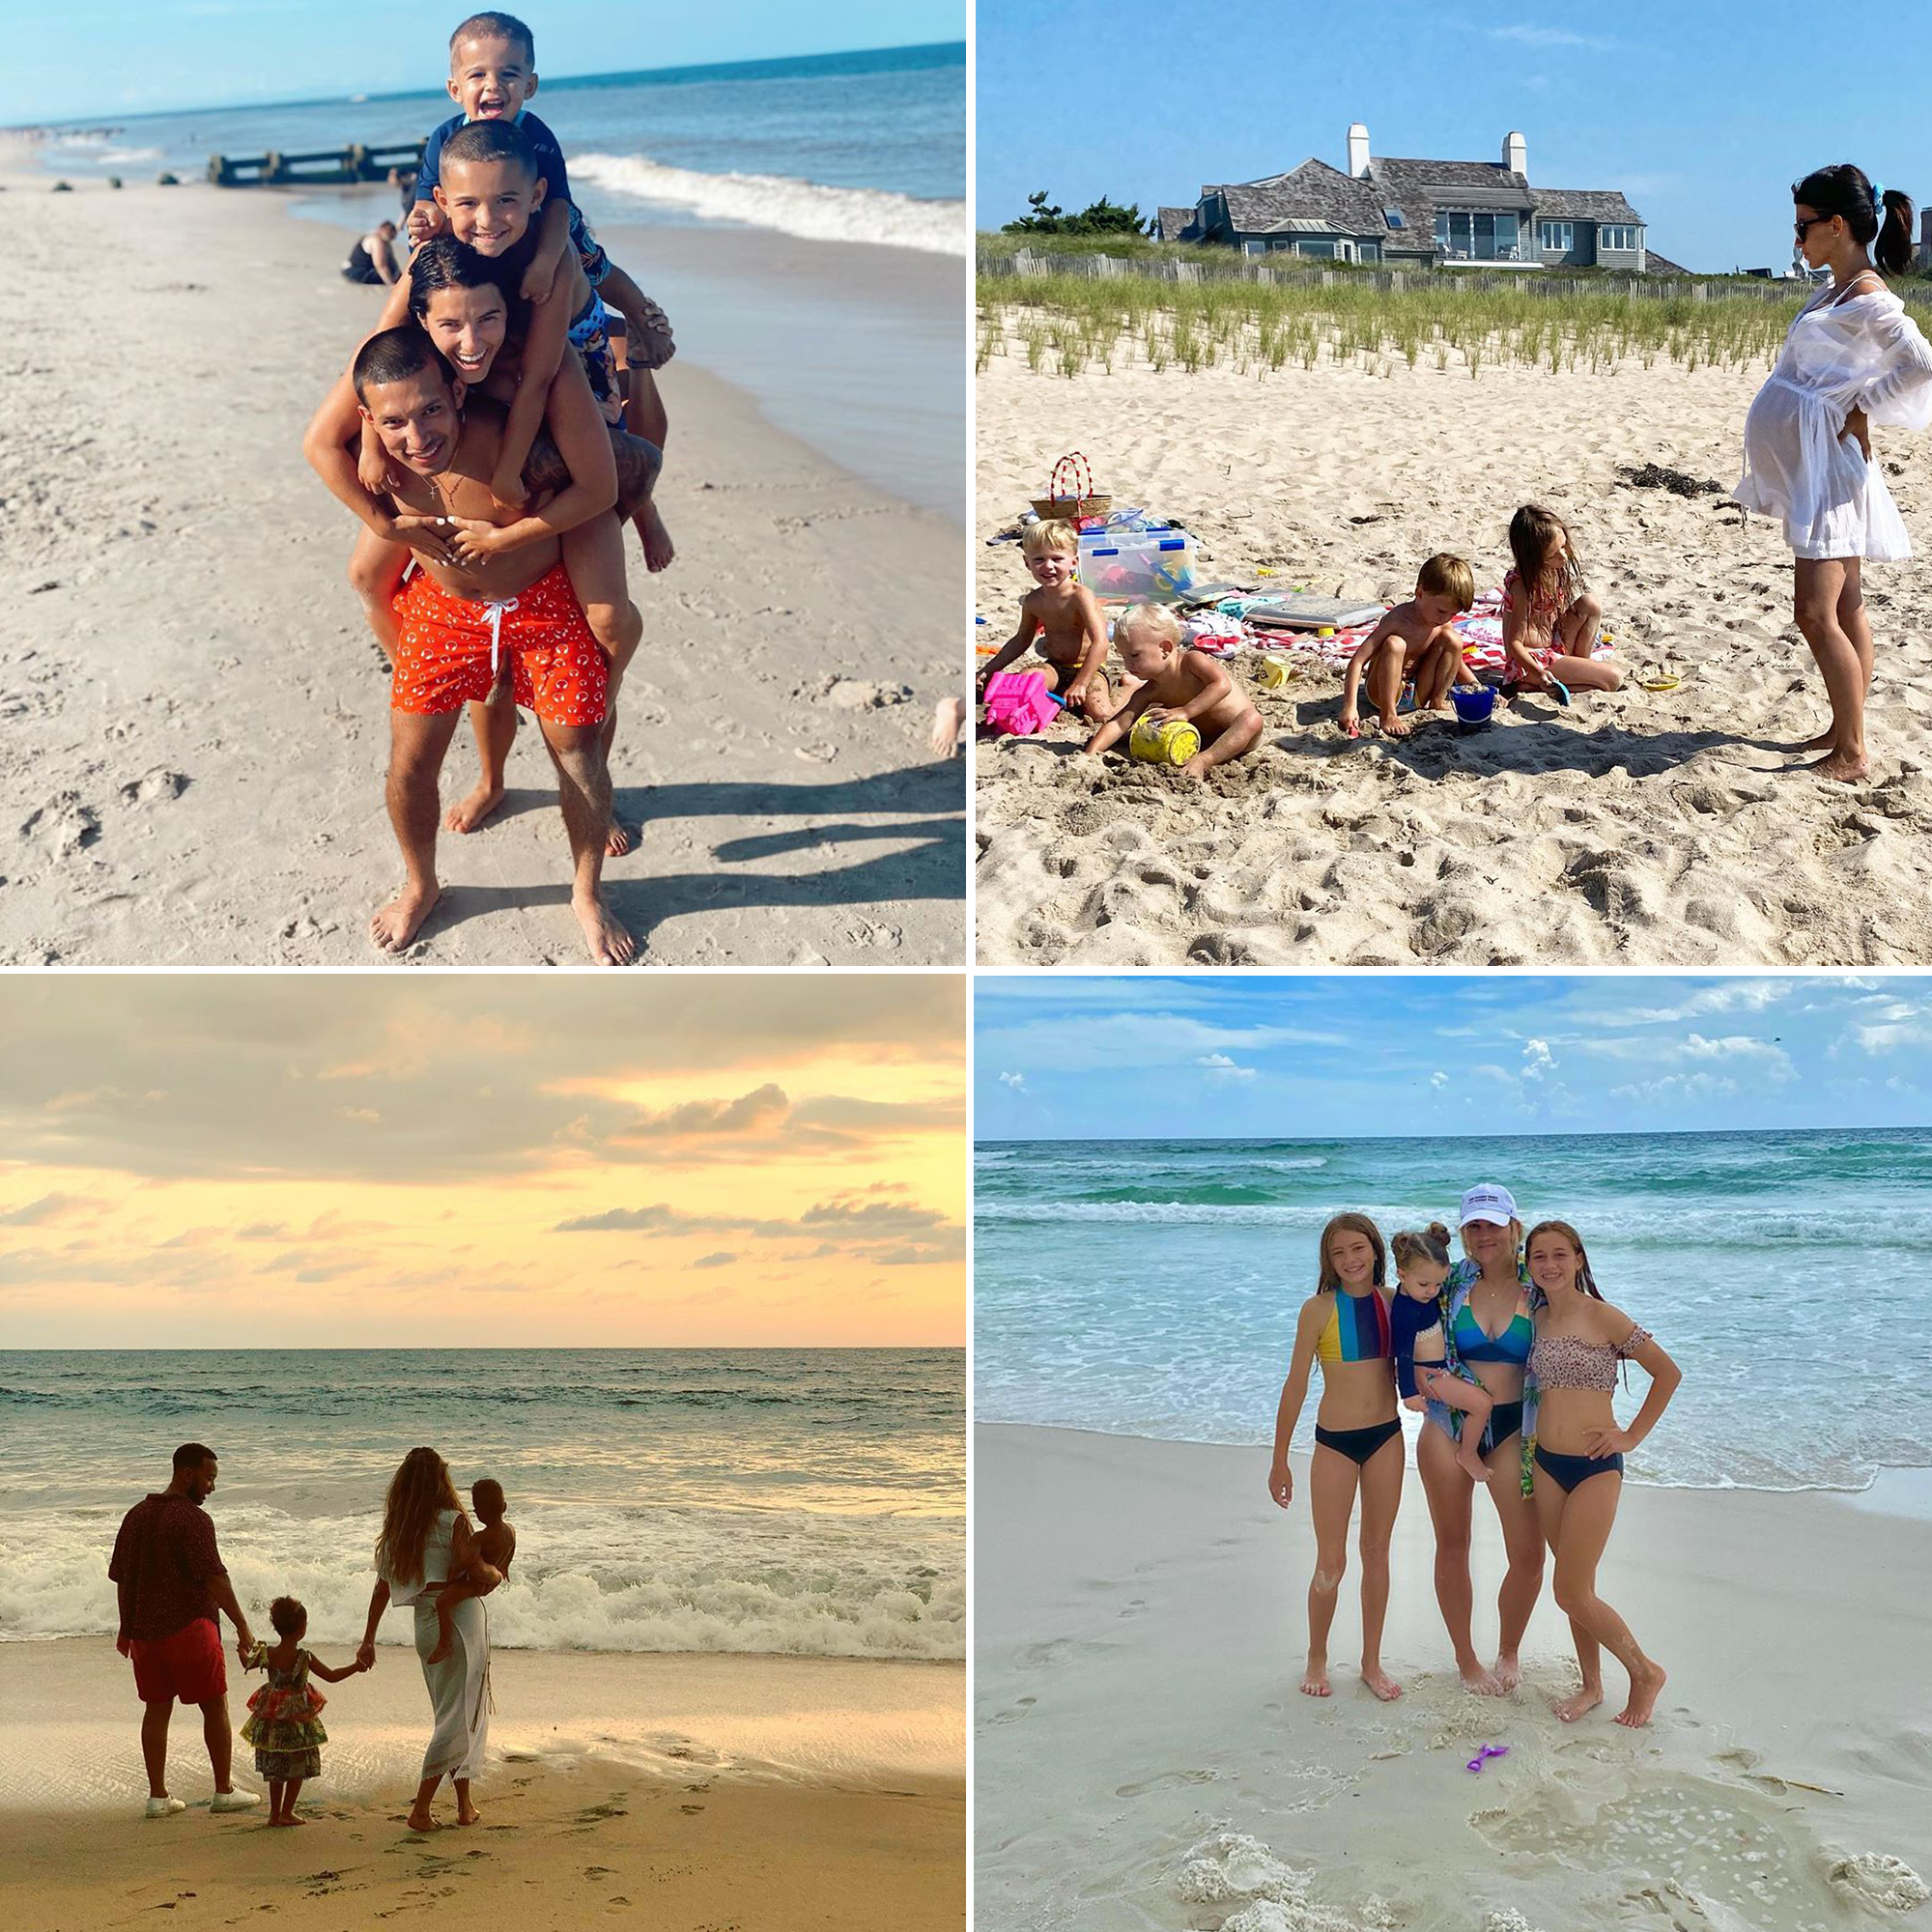 Nudist Beach Head - Celeb Families' Beach Trips Amid Coronavirus Pandemic: Pics